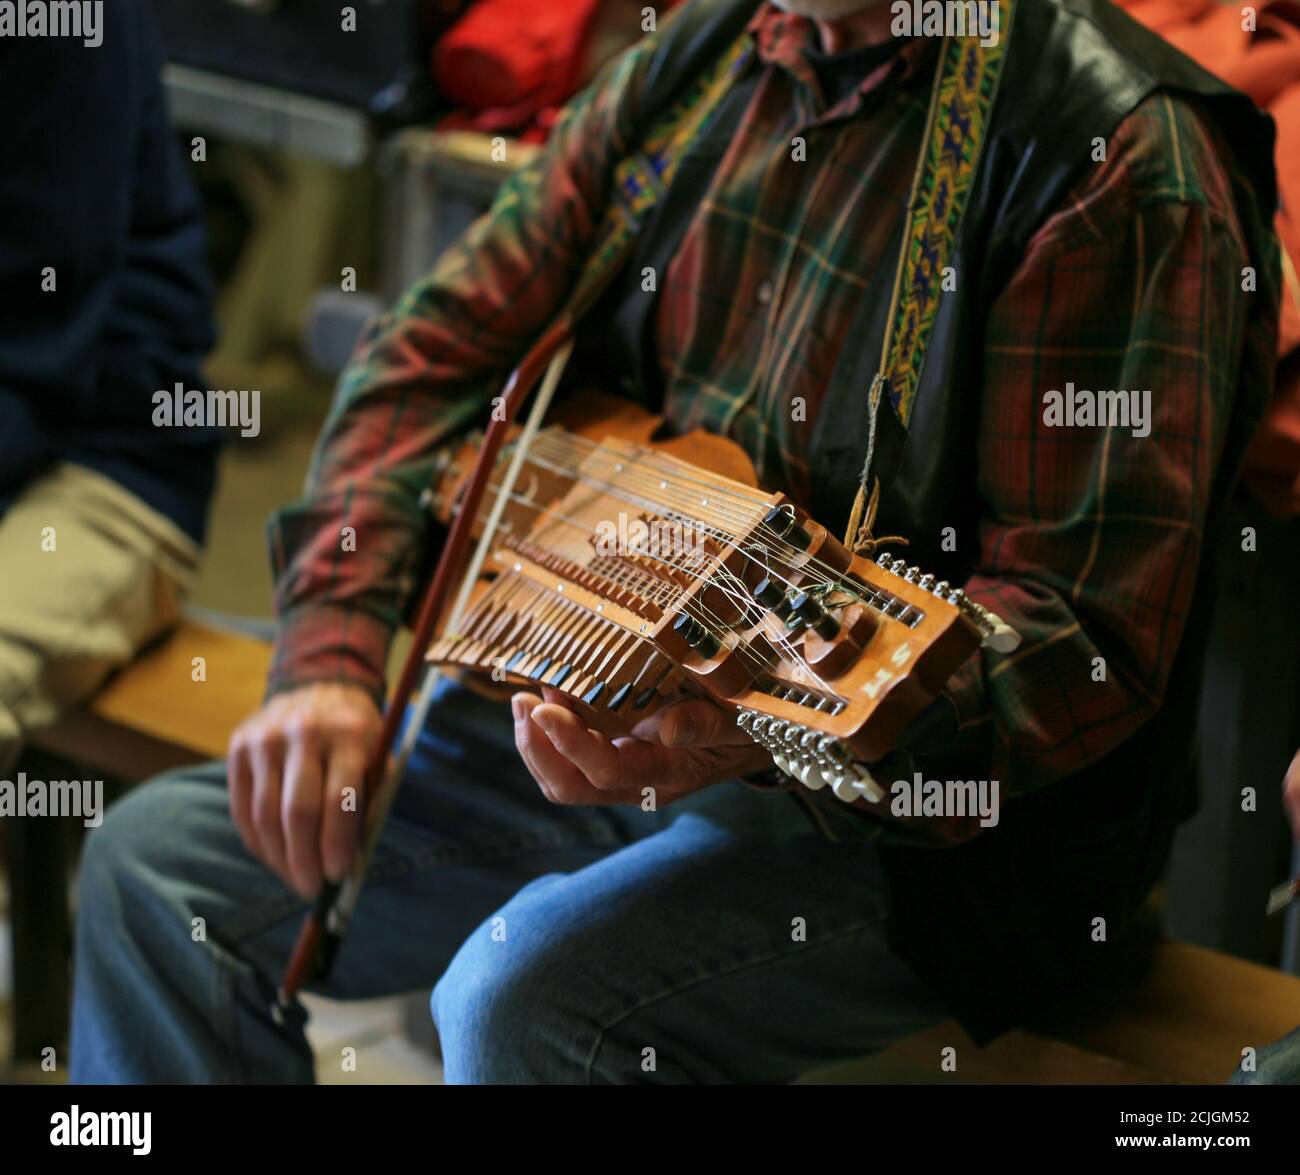 KEYED FIDDLE indoor playing Keyed fiddle Stock Photo